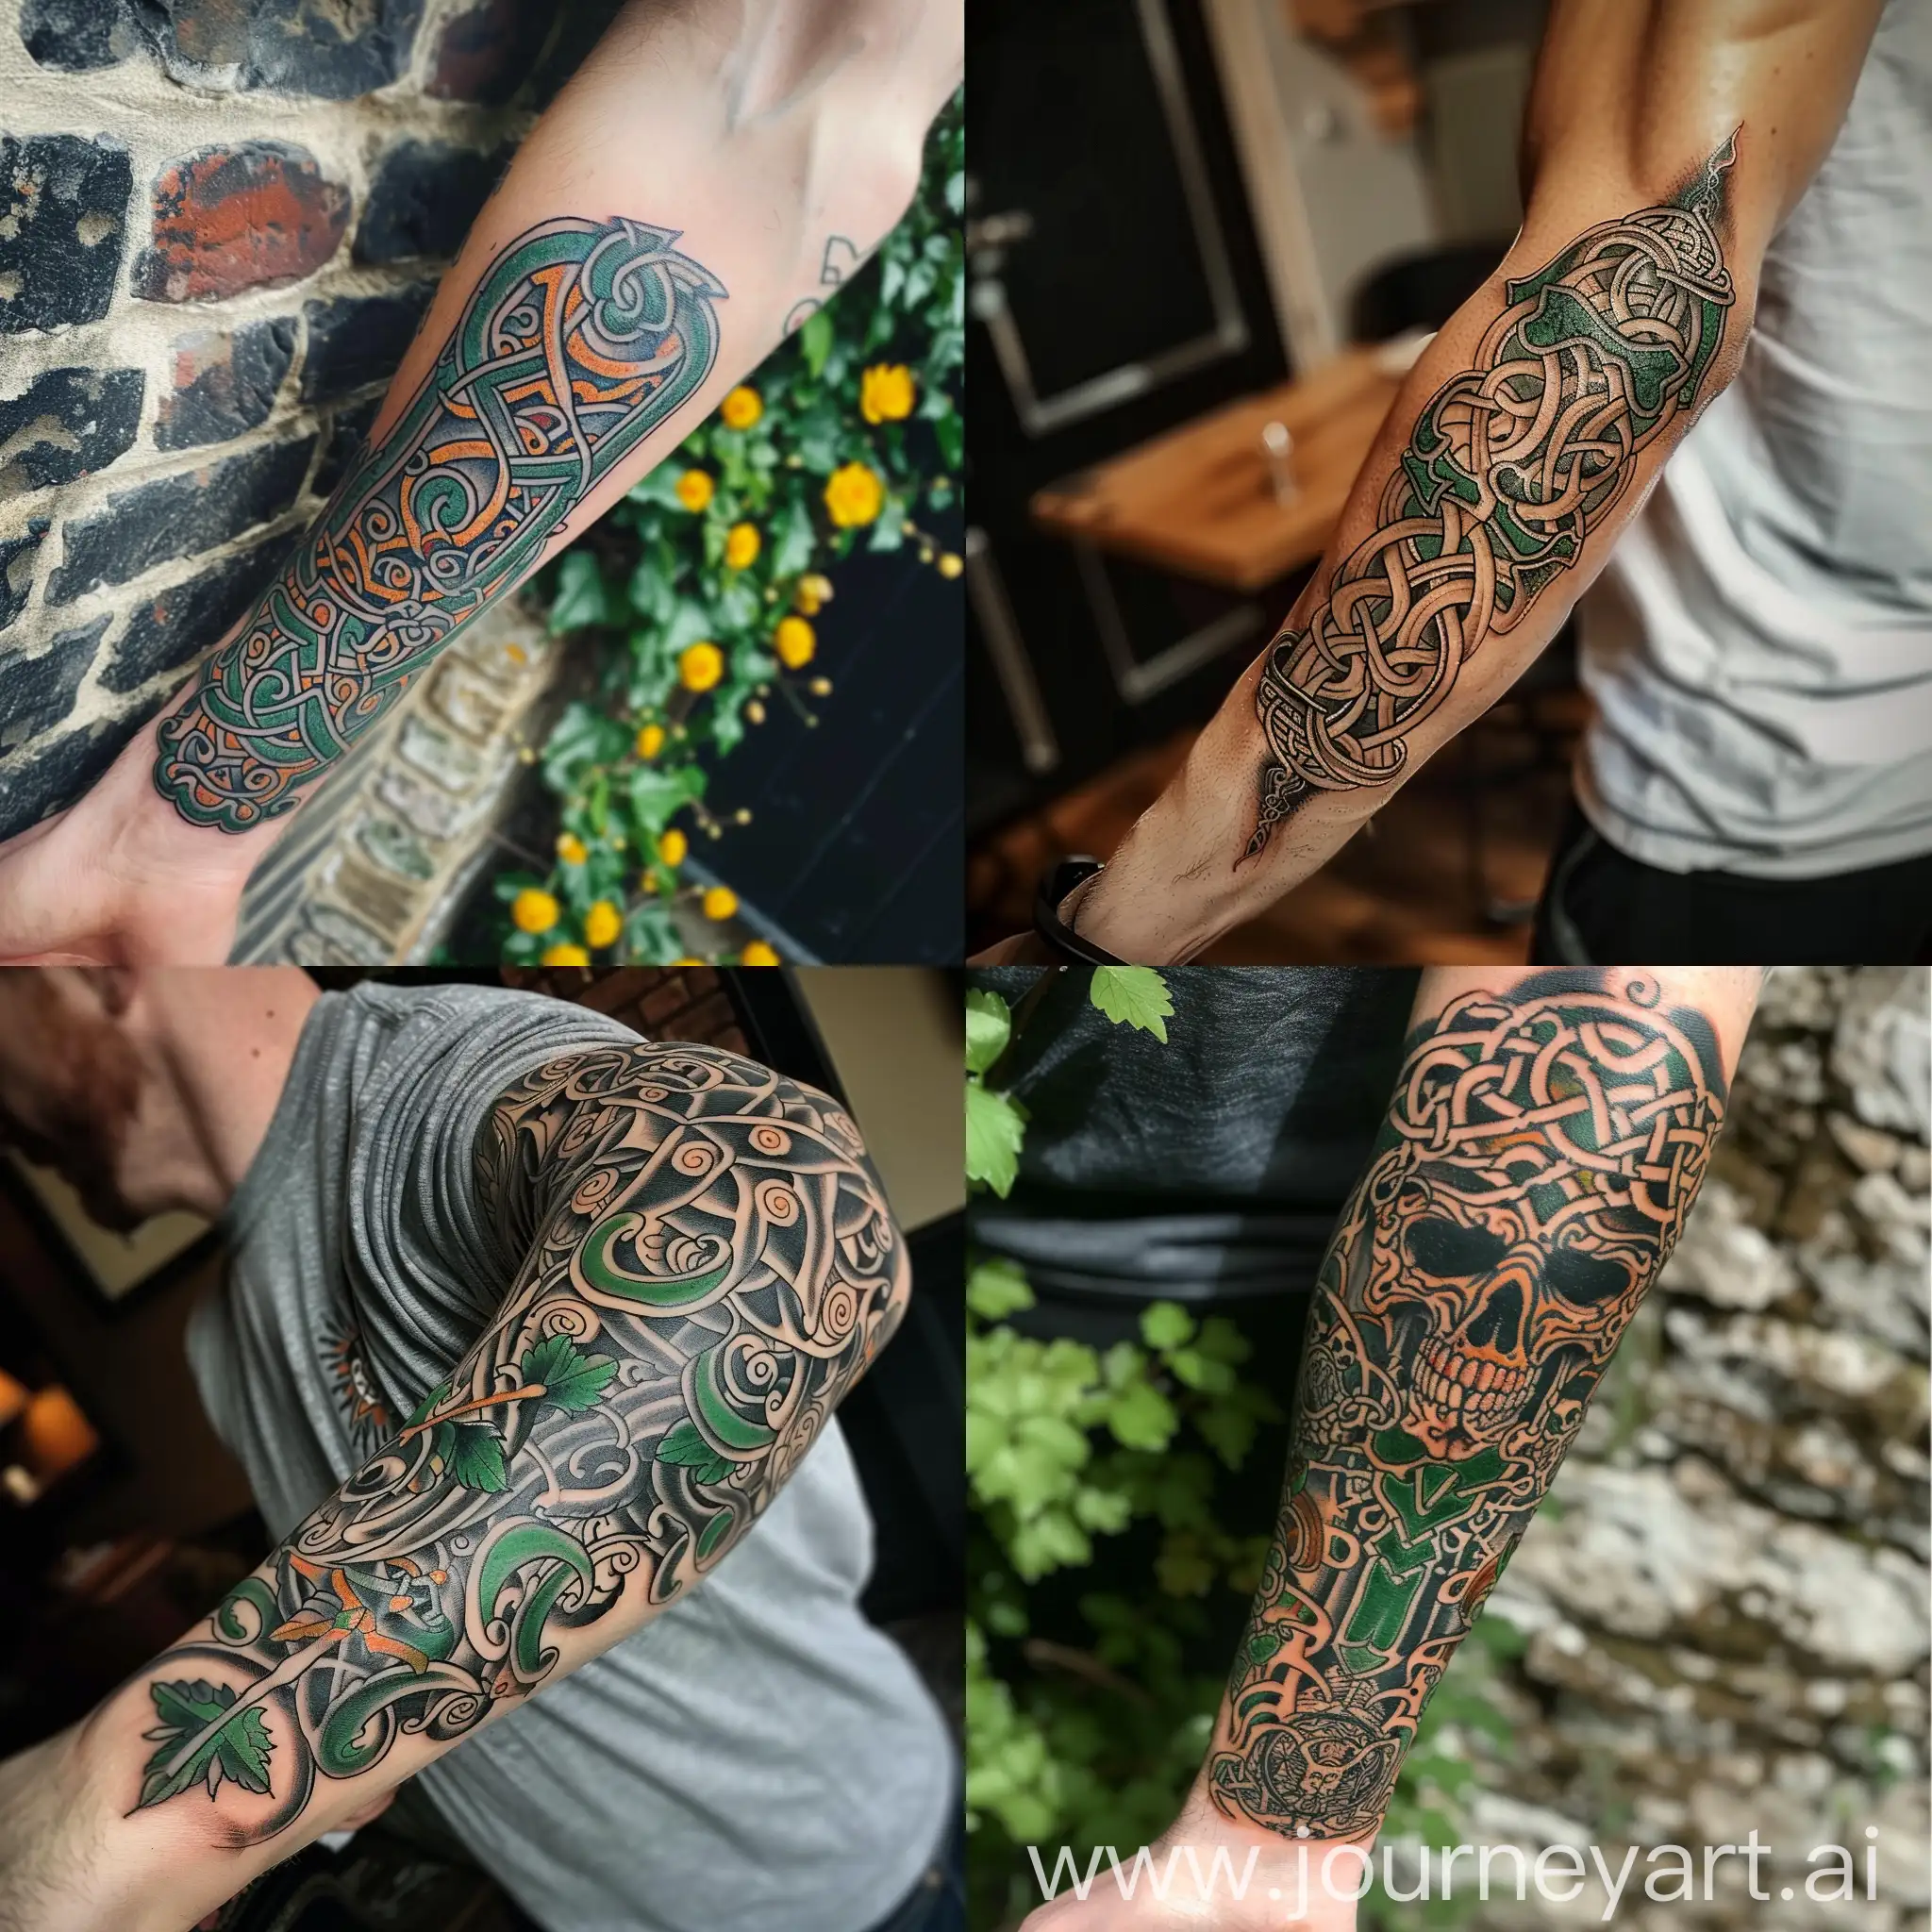 Traditional-Irish-Tattoo-Design-with-Celtic-Knots-and-Shamrocks